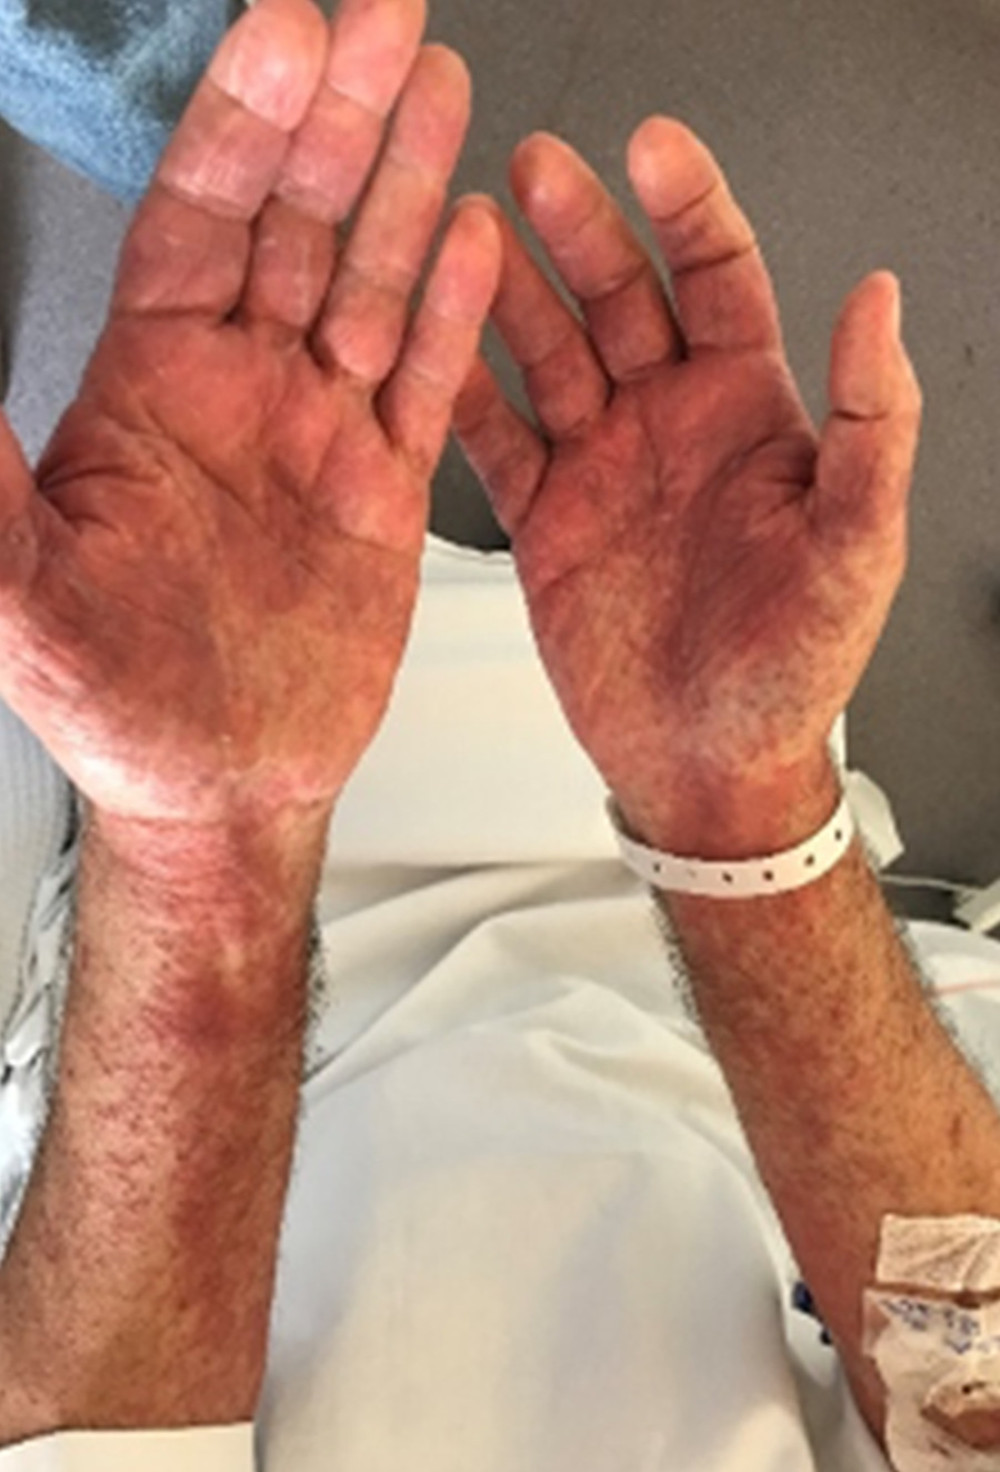 Maculopapular rash over the palms.